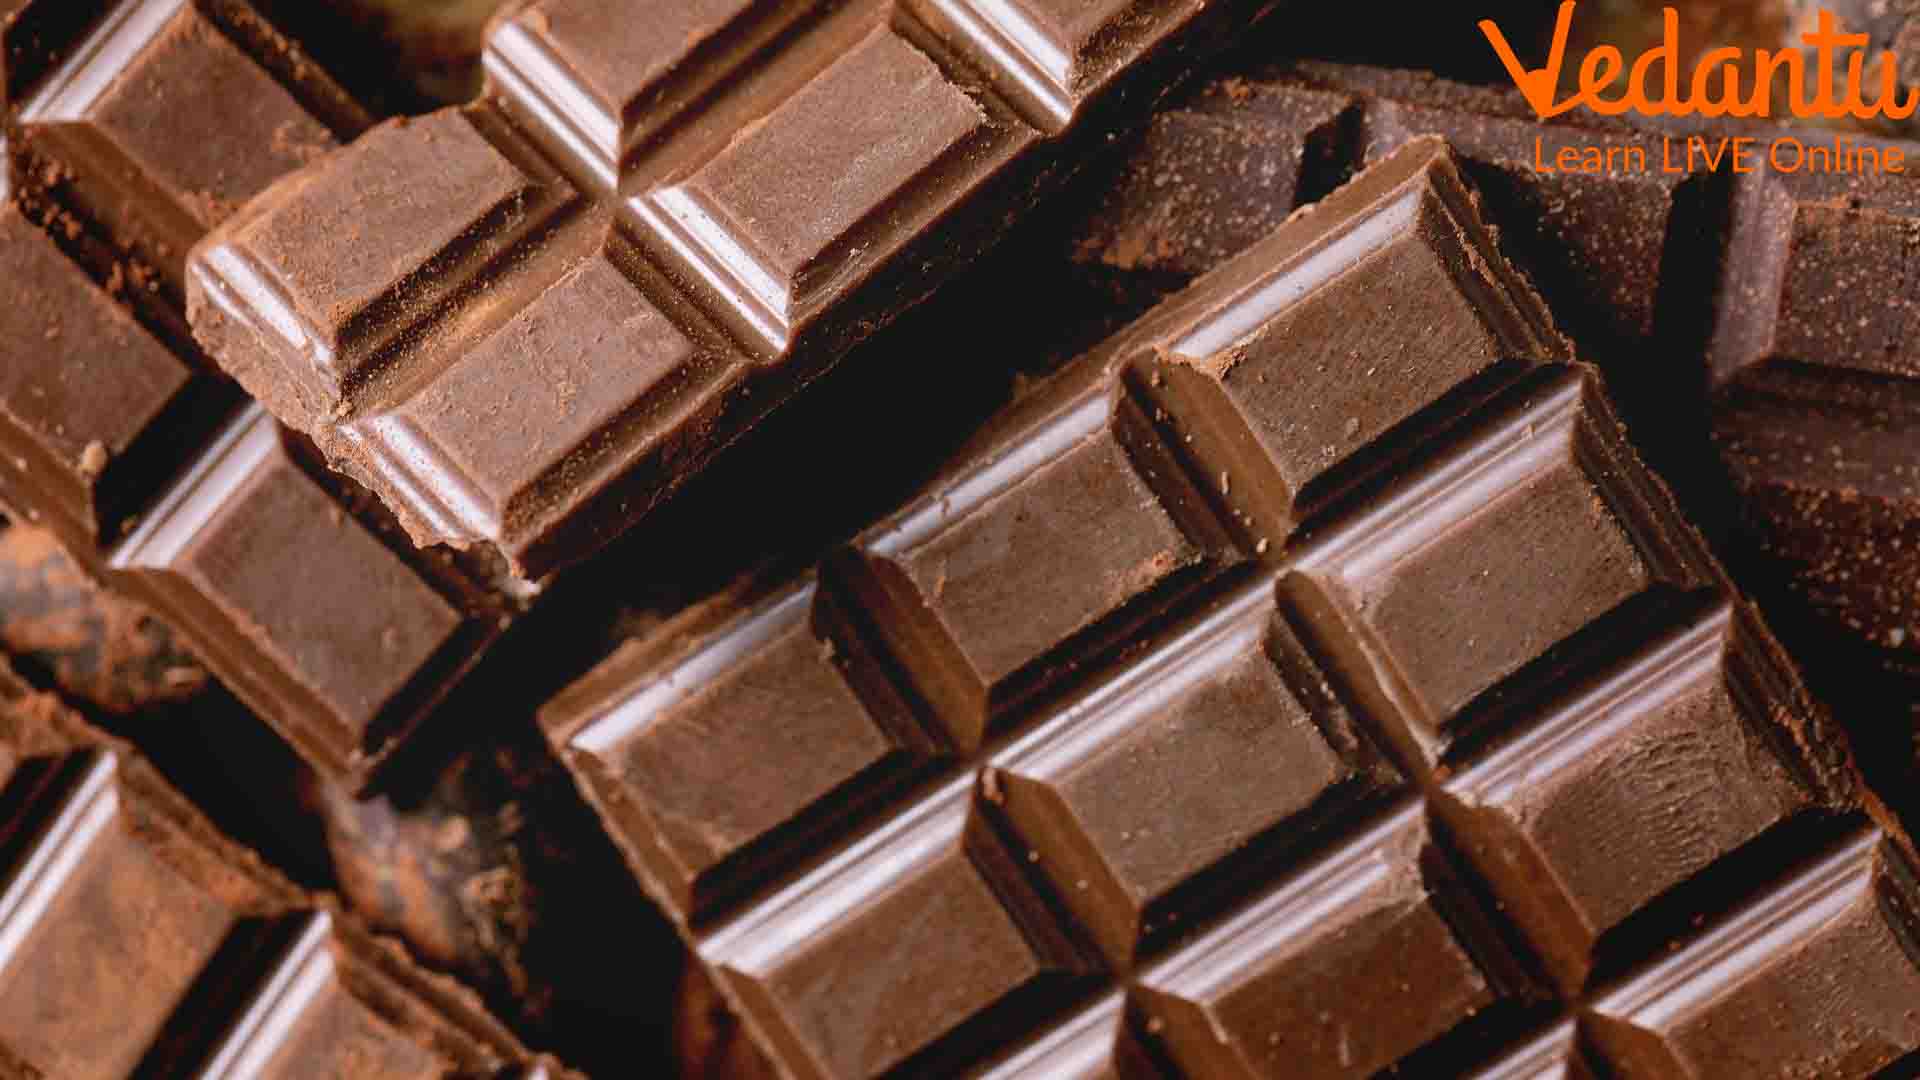 Pieces of a Chocolate Bar